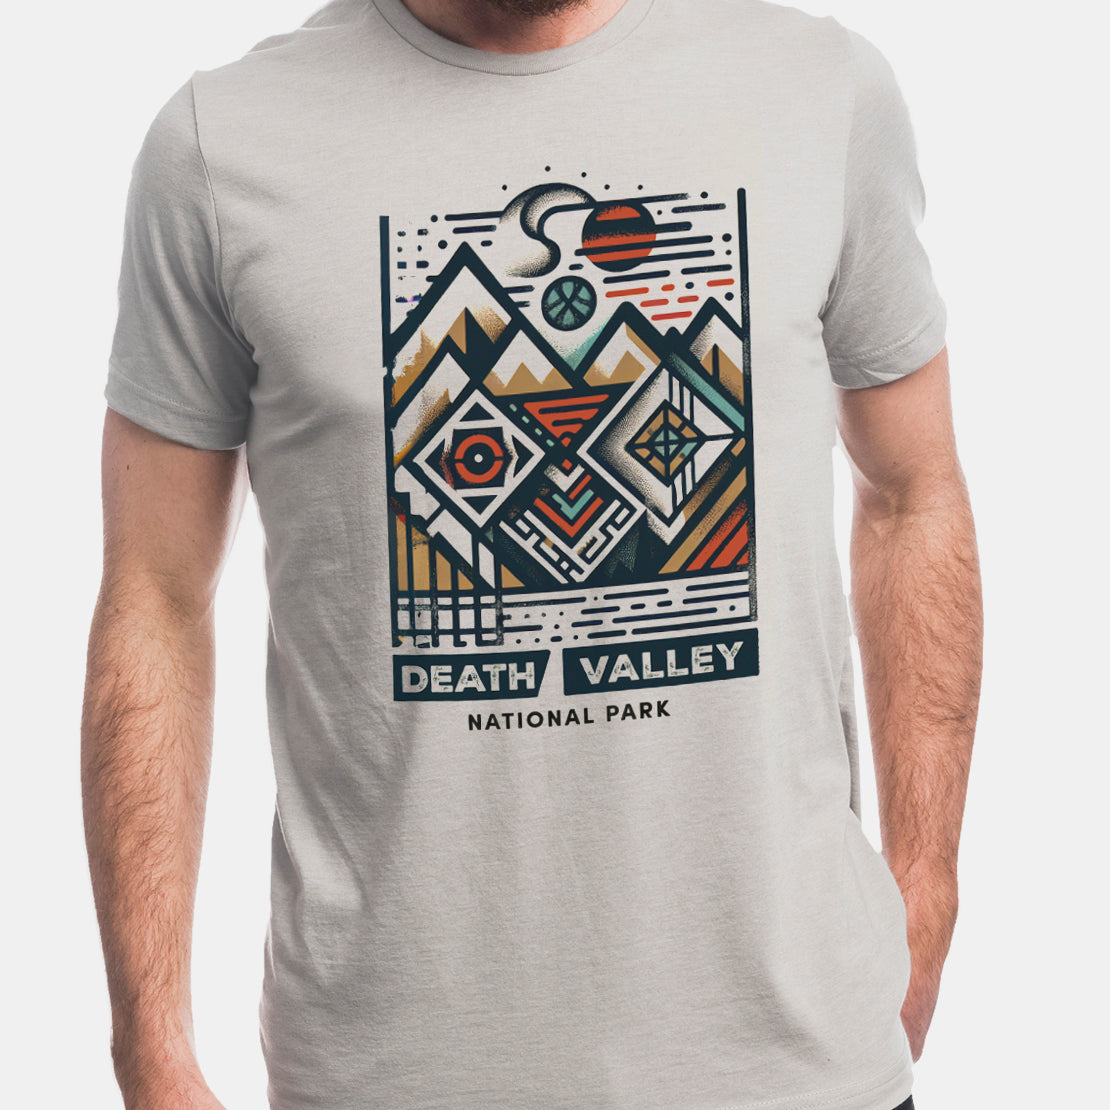 Mens-Death-Valley-National-Park-Tshirt-1